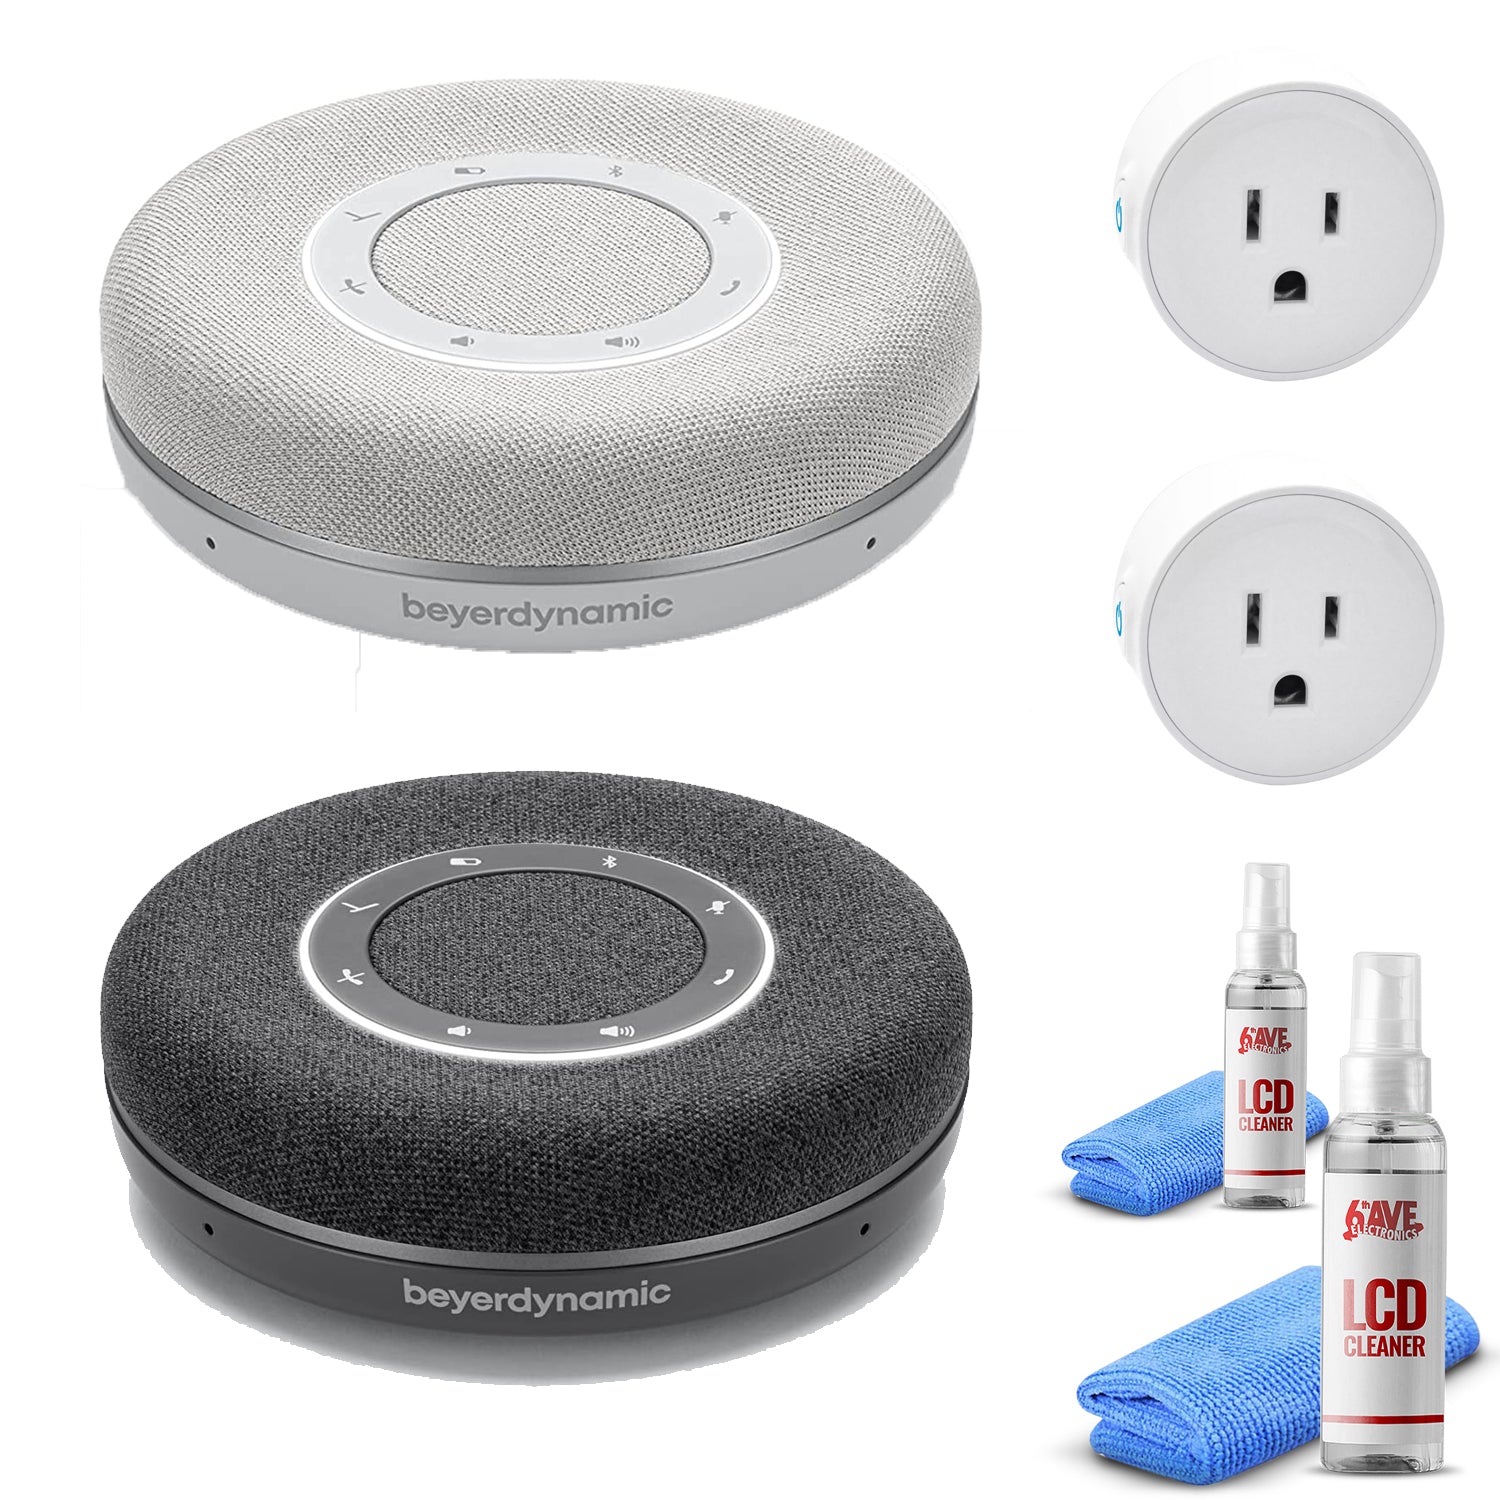 2-Beyerdynamic Speakers Grey and Charcoal + 2-Mini Smart Plug + 2-LCD Cleaners